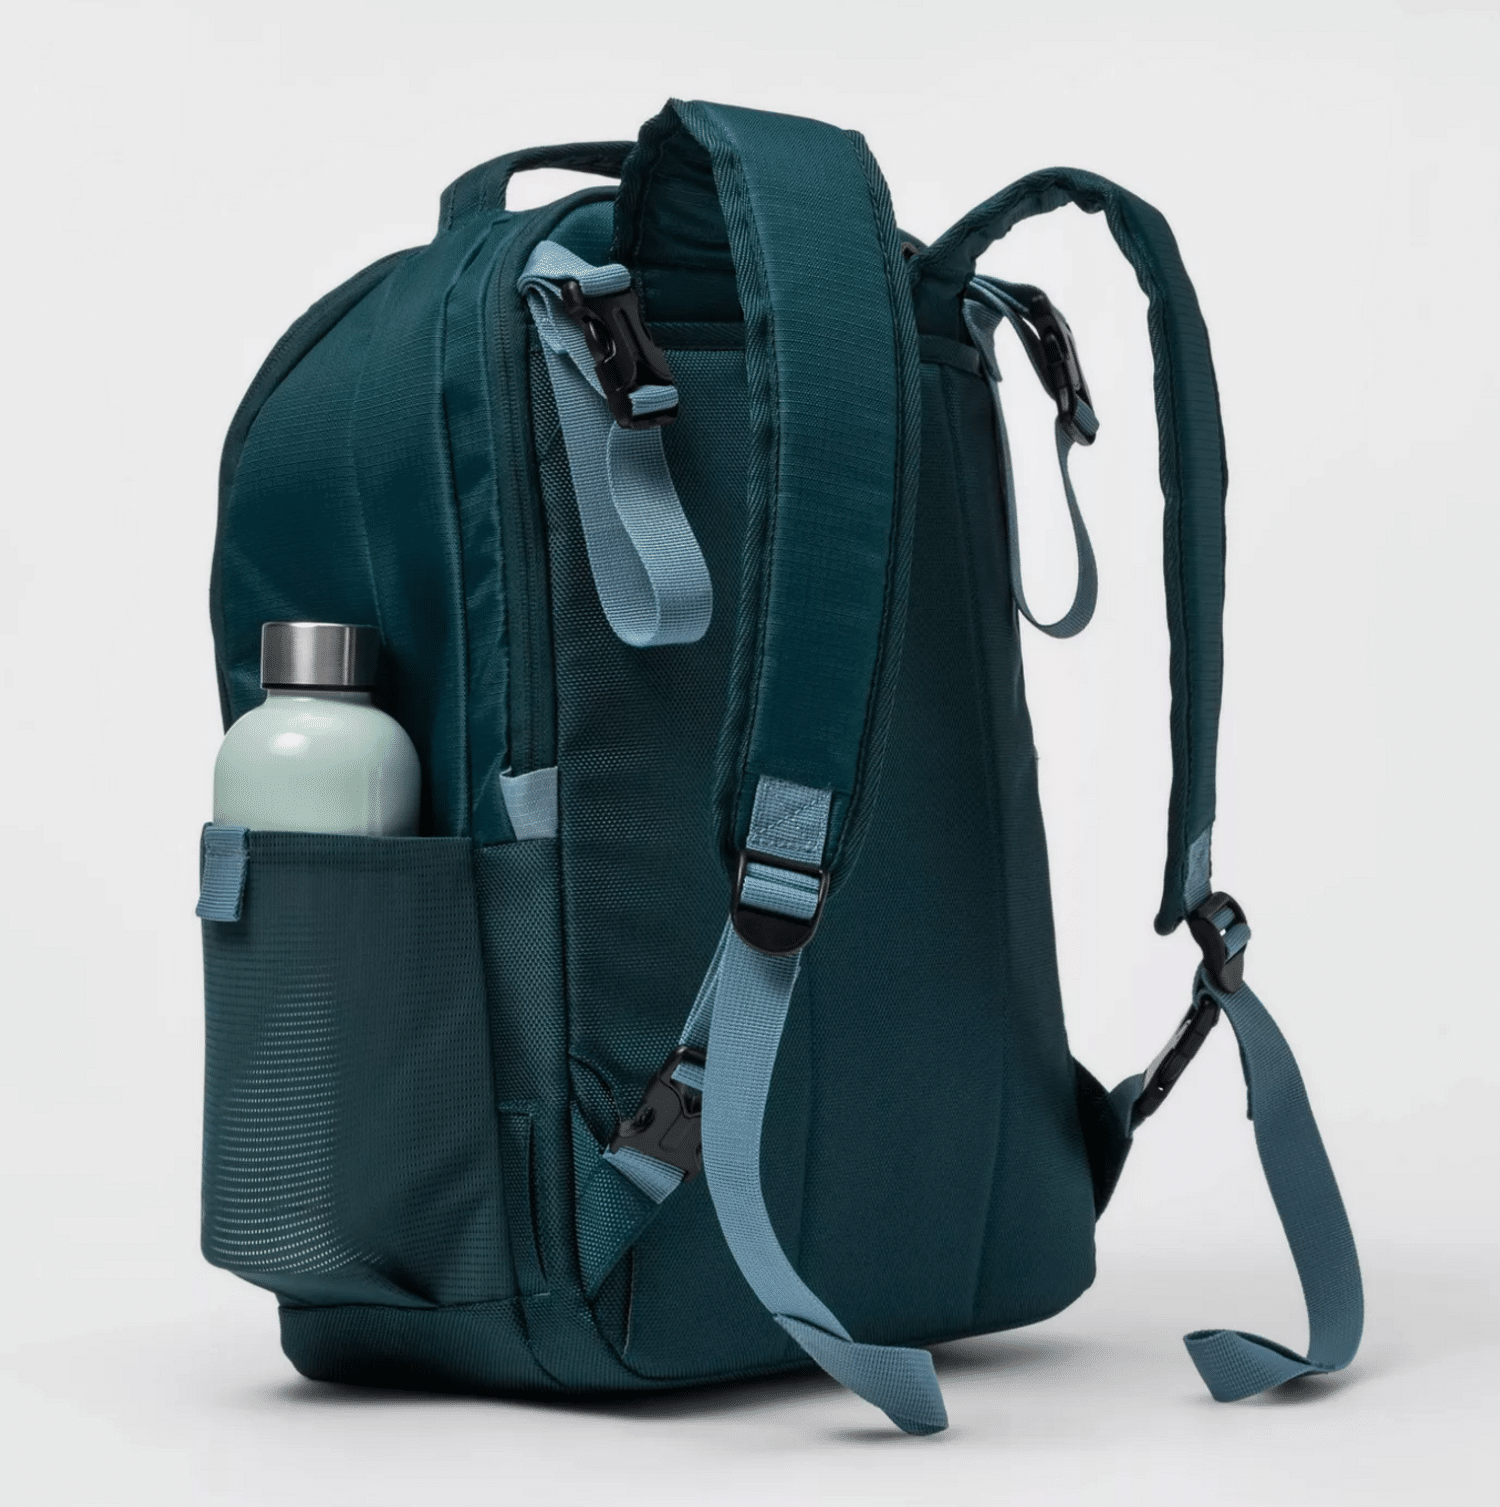 Adaptive Backpacks by Target